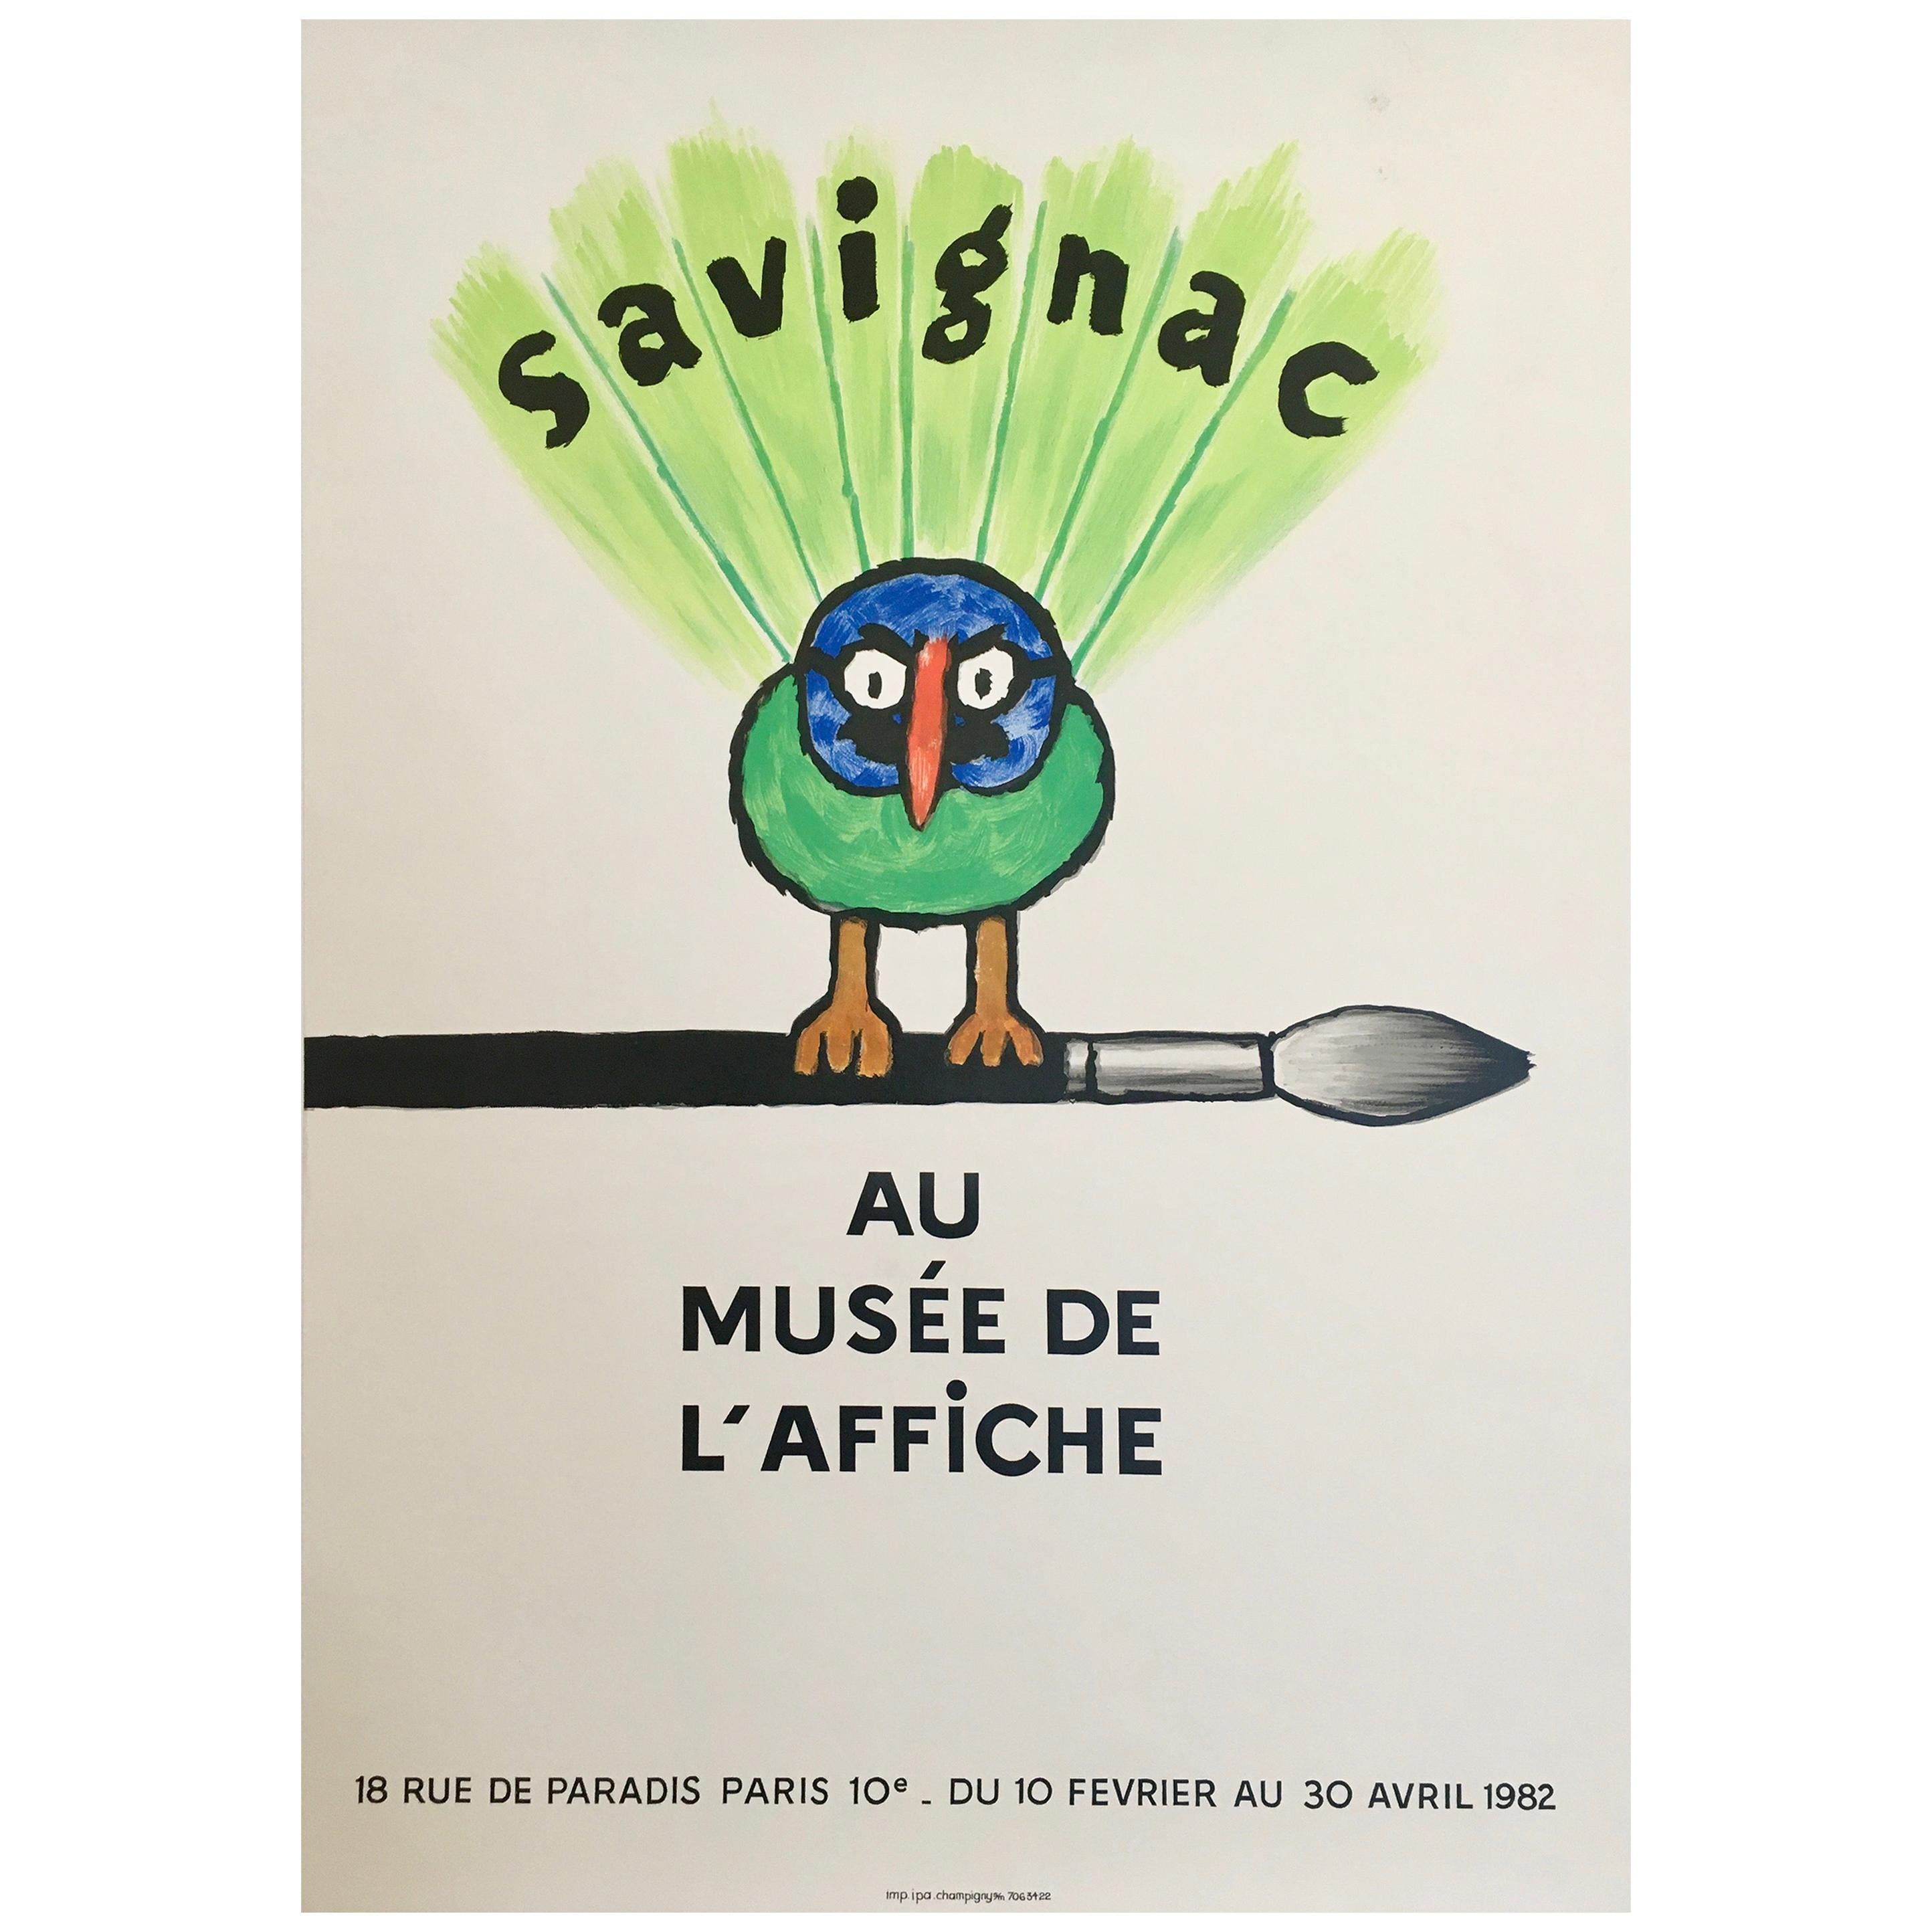 Savignac Bird 'Au Musee De L’Affich' Original Vintage French Exhibition Poster